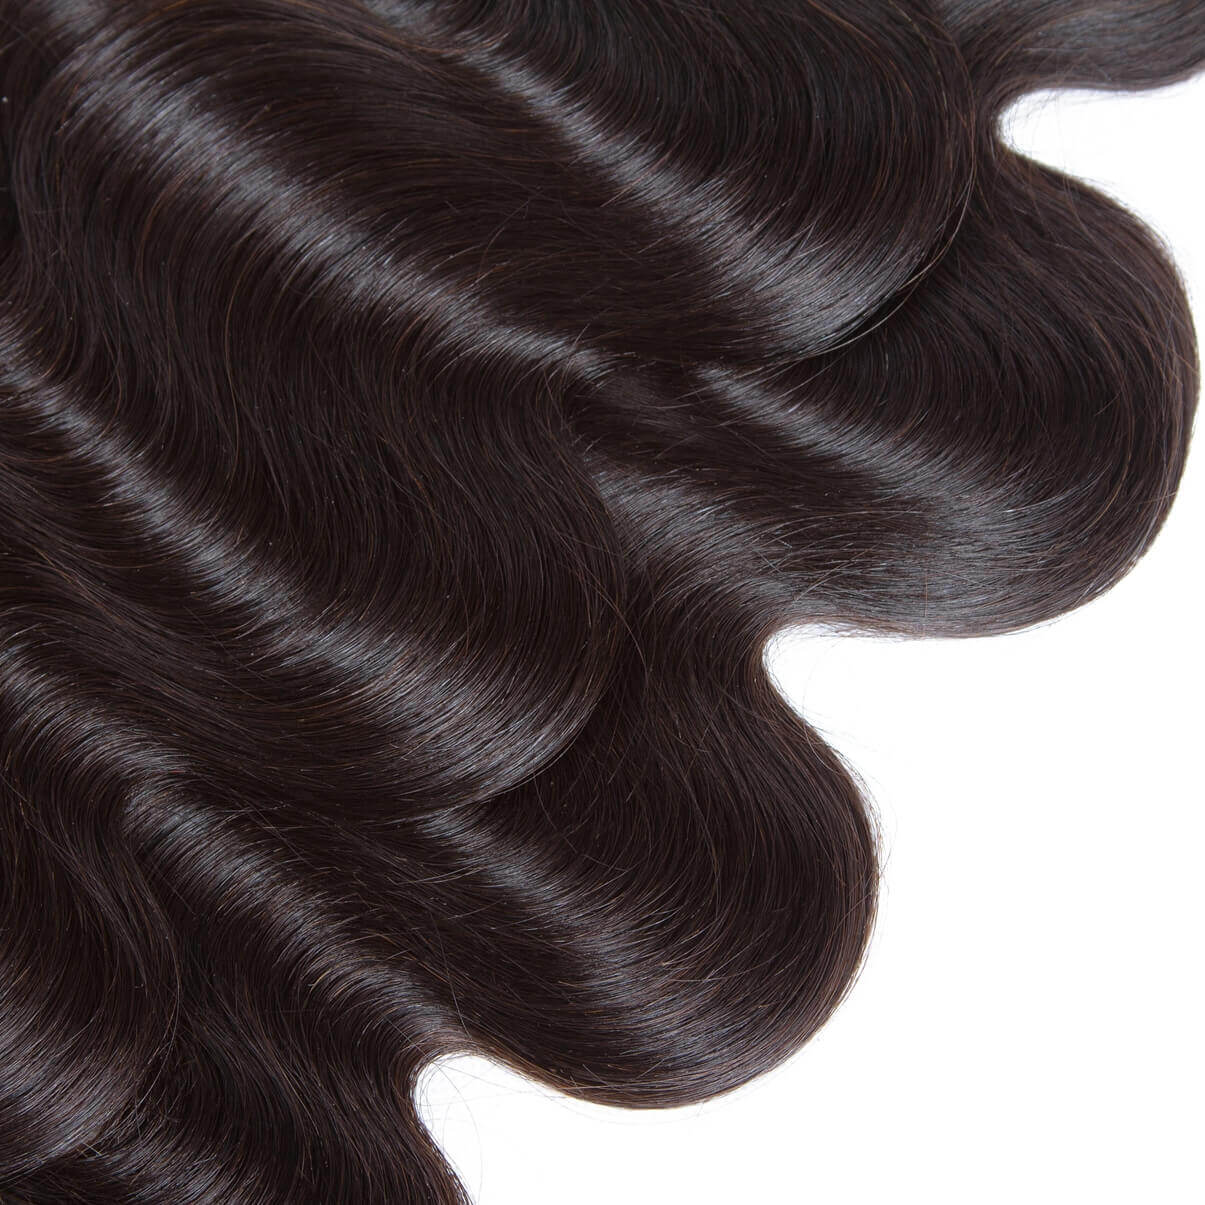 Lakihair Body Wave 1 Bundle Hair Weaving Virgin Human Hair 1 Single Bundle Deals